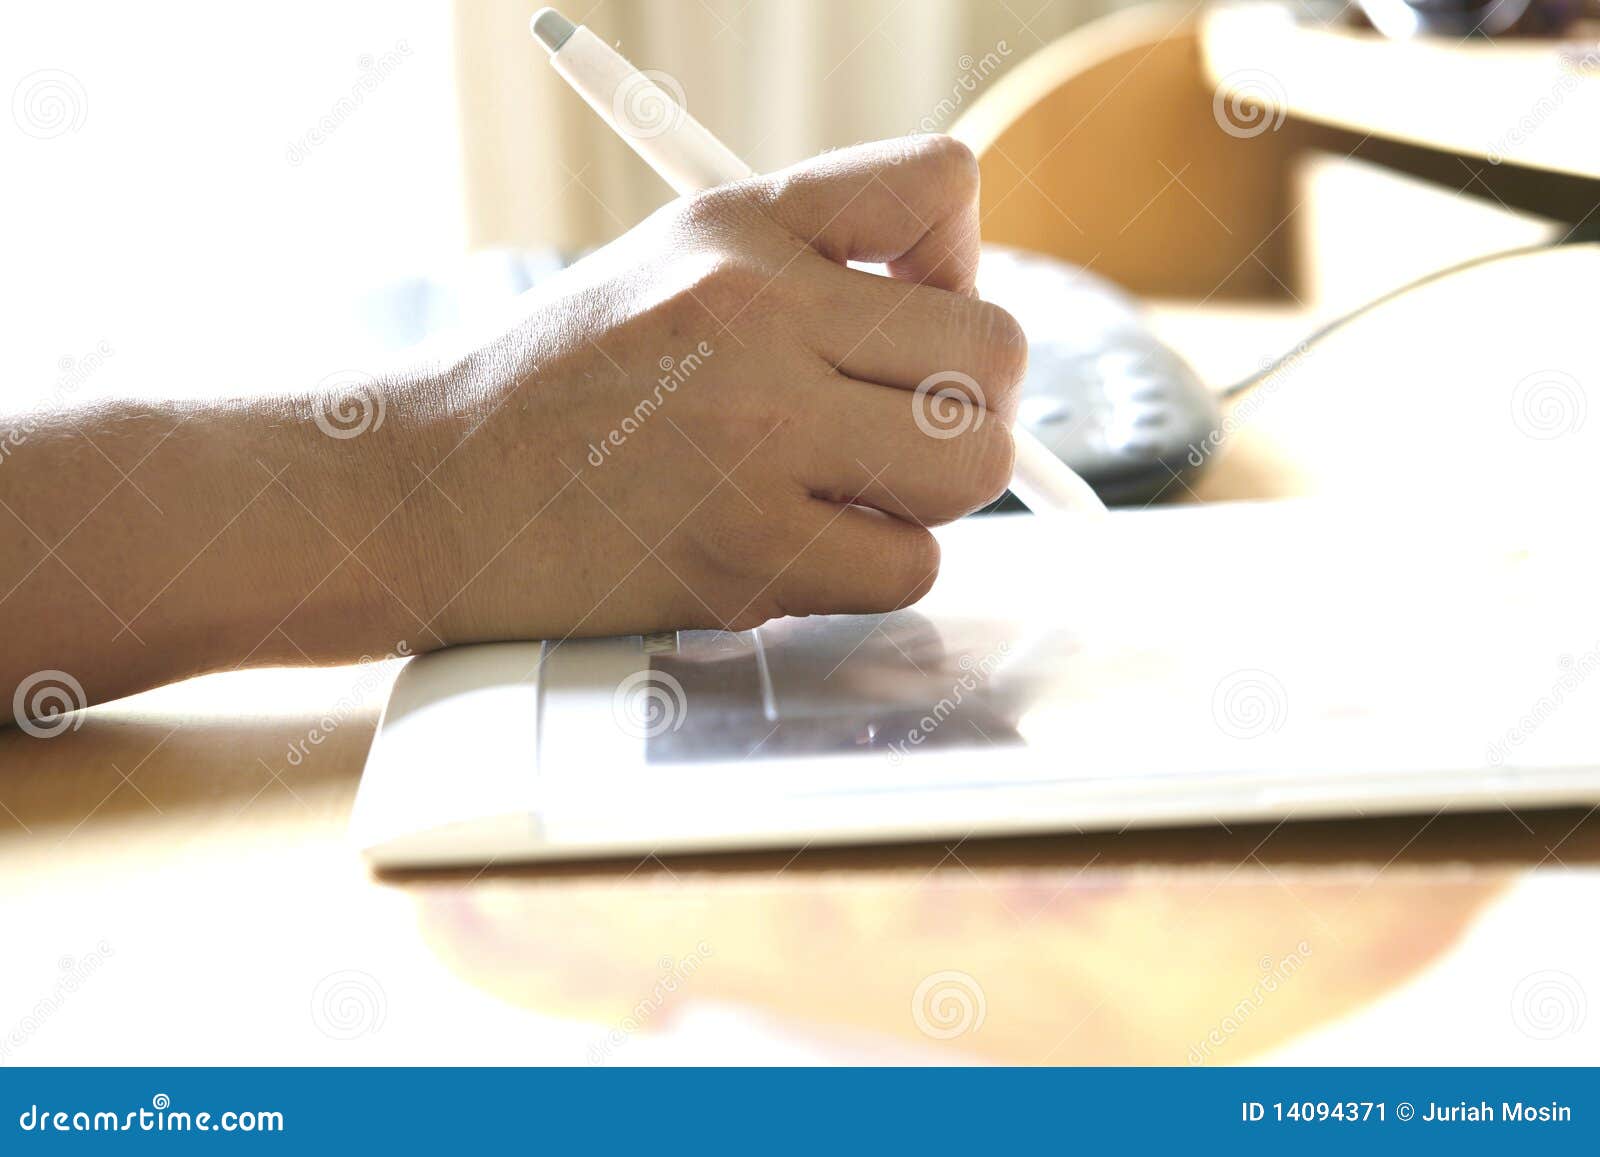 hand holding stylus pen